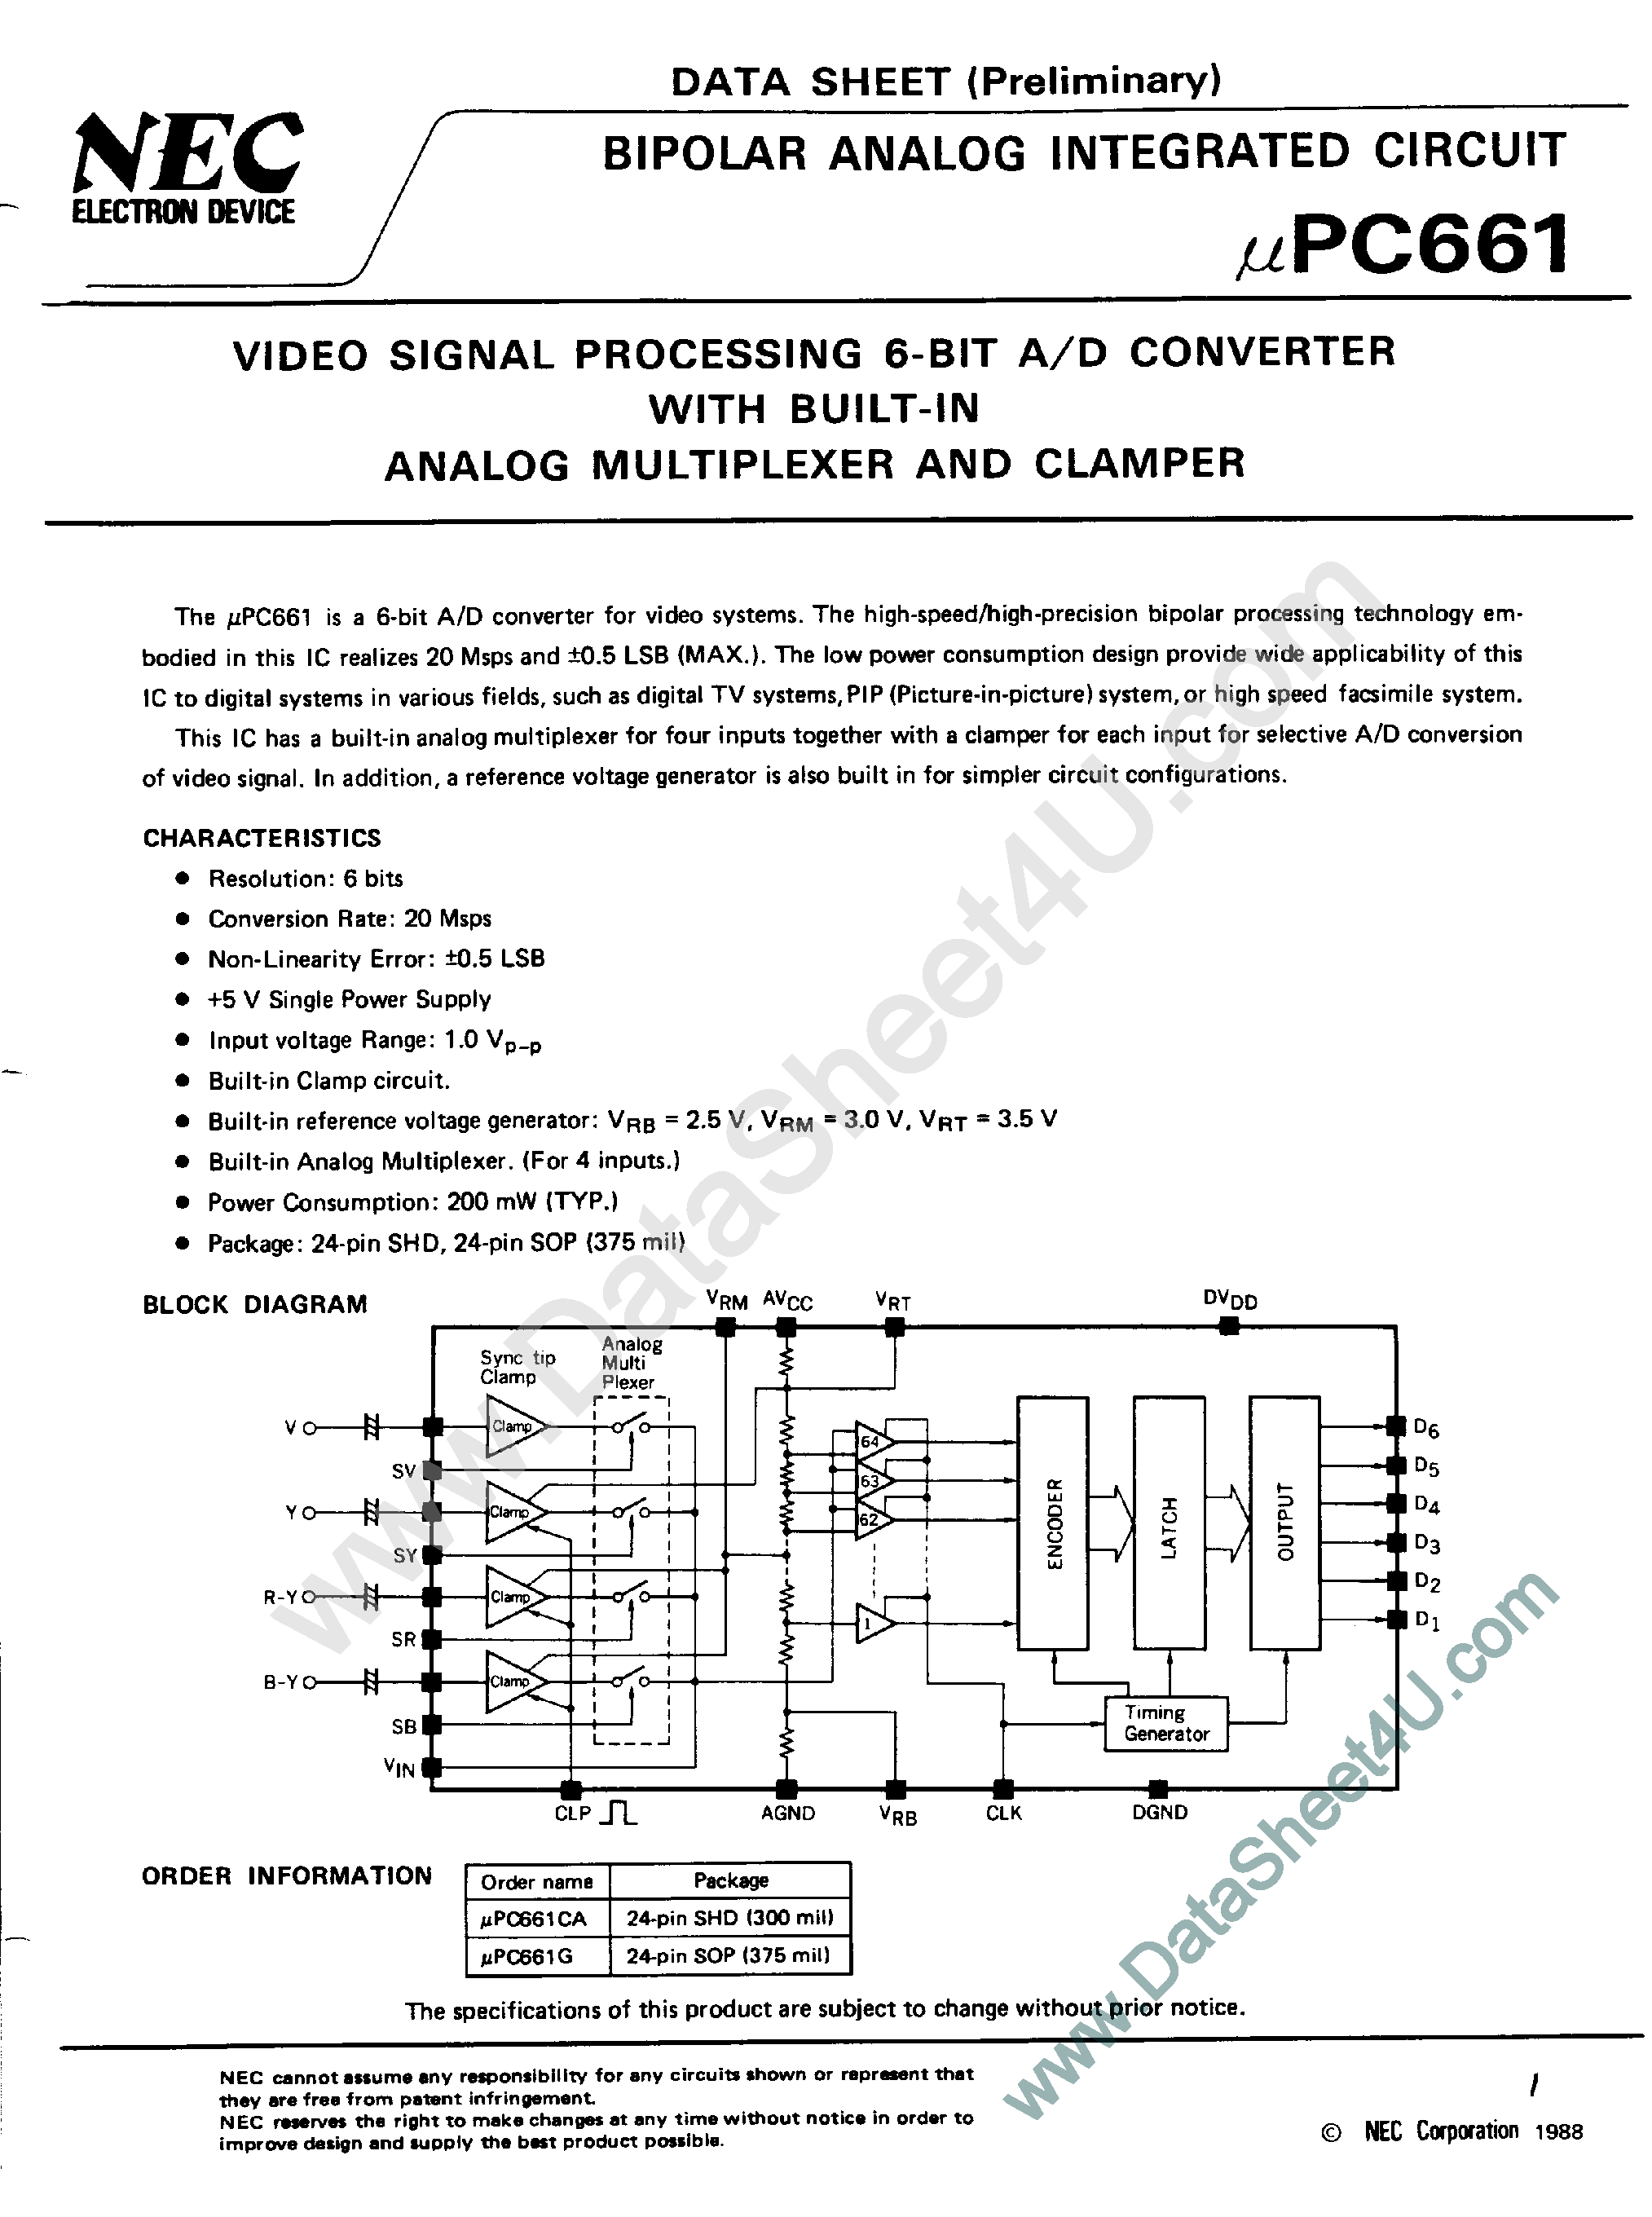 Datasheet UPC661 - Video Signal Processing 6-Bit A/D Converter page 1